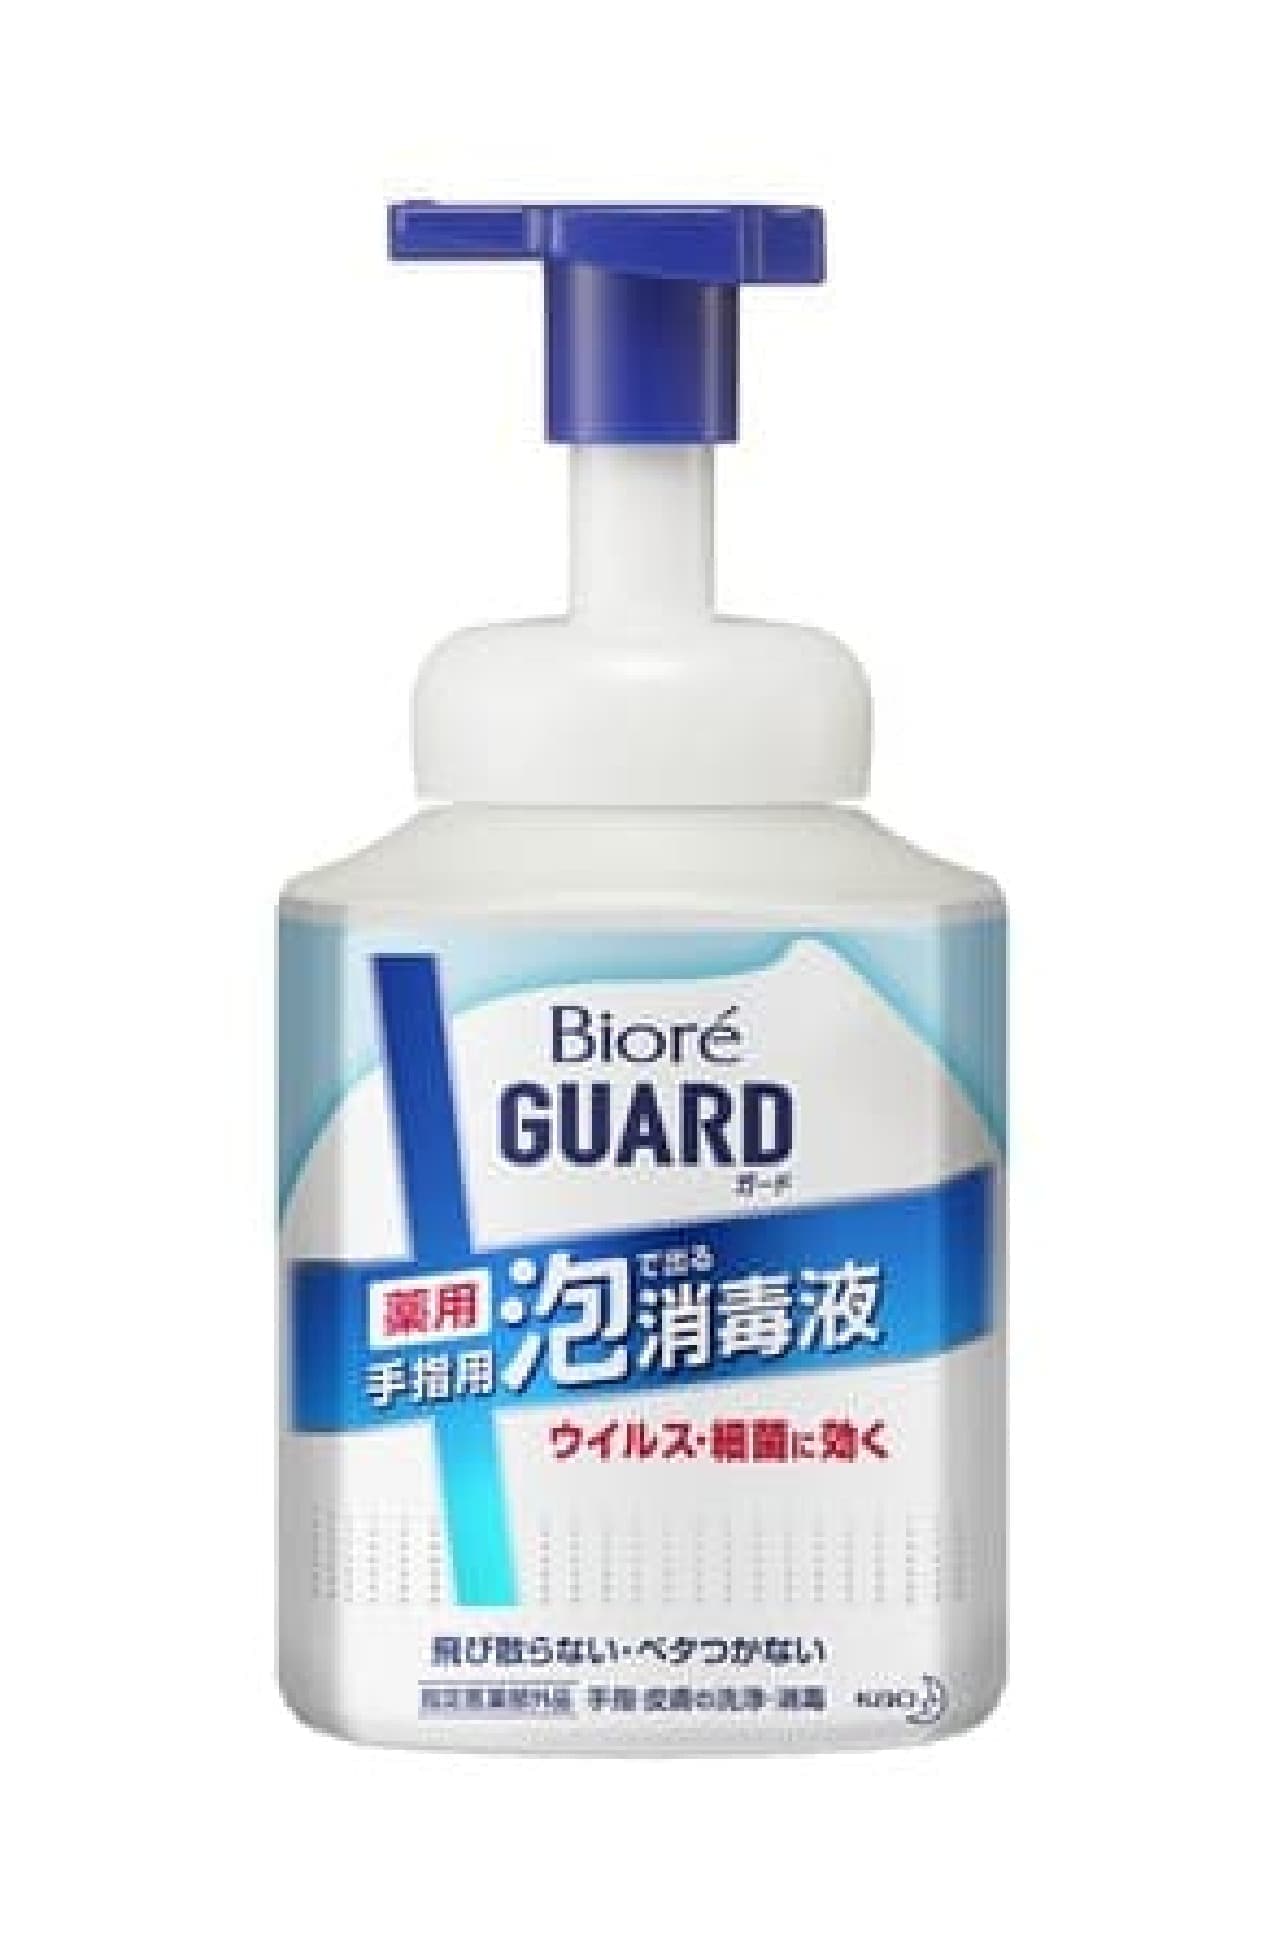 Introducing "Bioregard Medicinal Foam Disinfectant" --New foam hand soap and hand emulsion